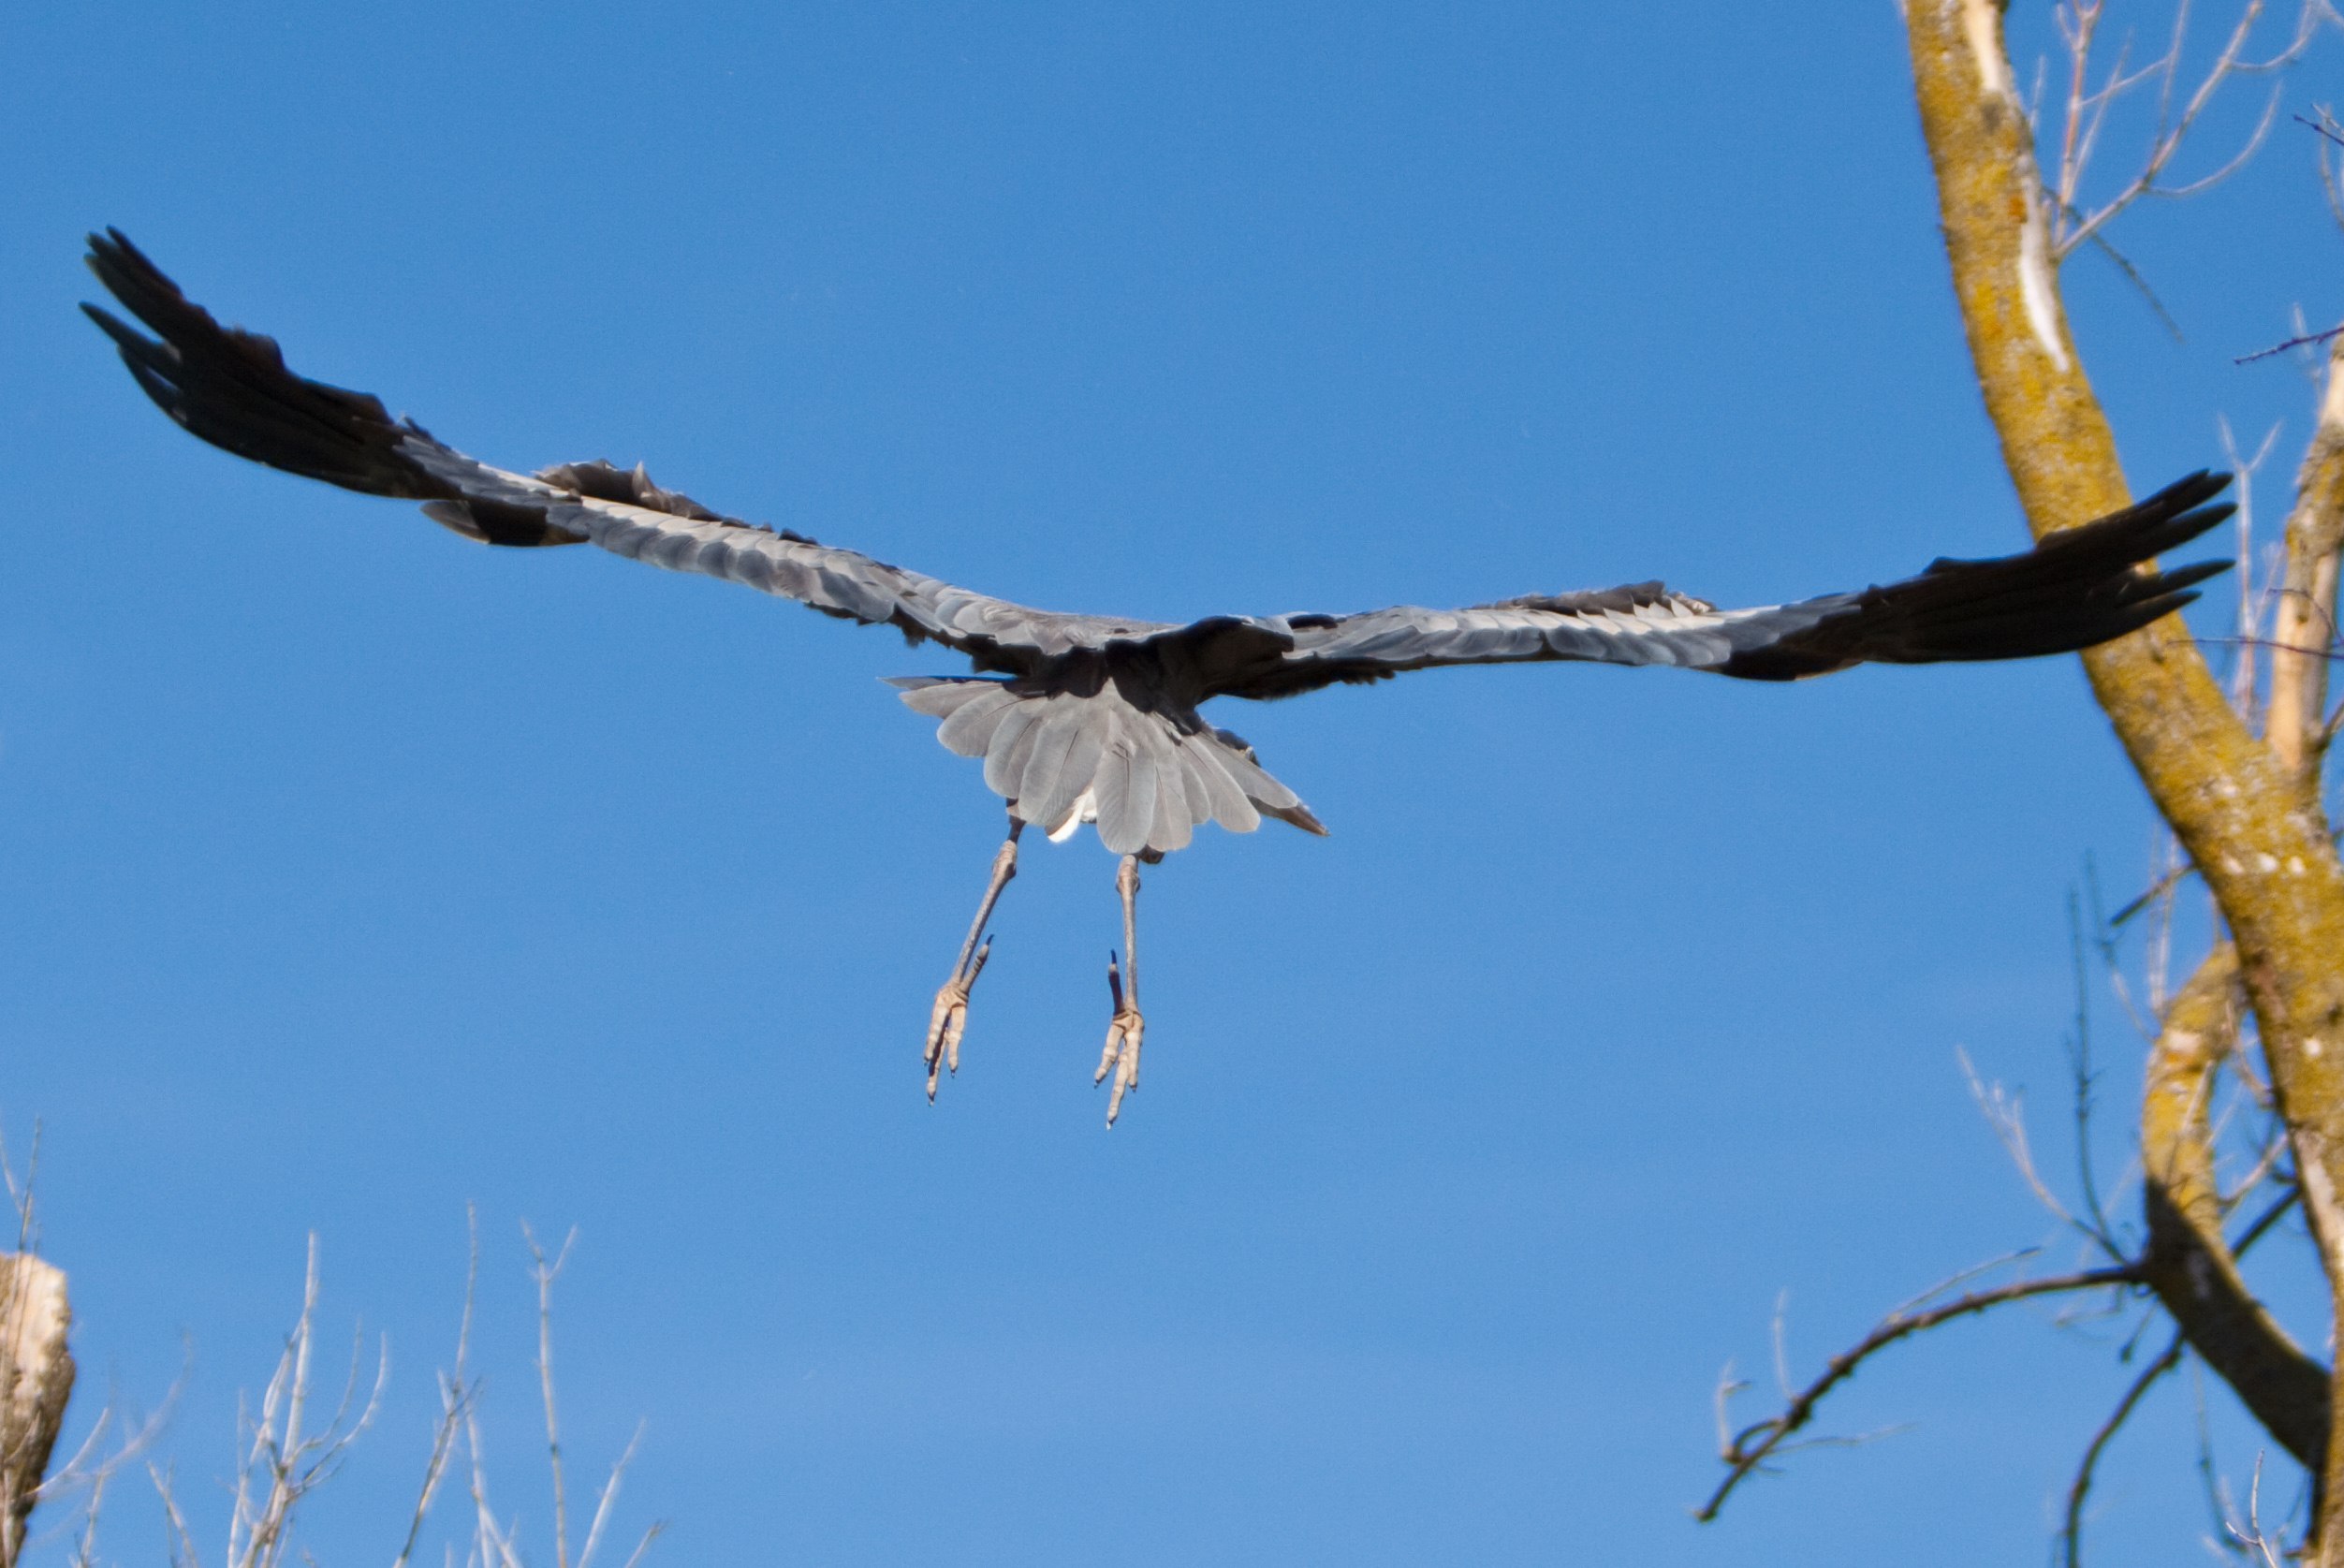 Falling bird. Падающая птица. Падение птицы. Крылья падающей птицы. Птицы Канады фото.